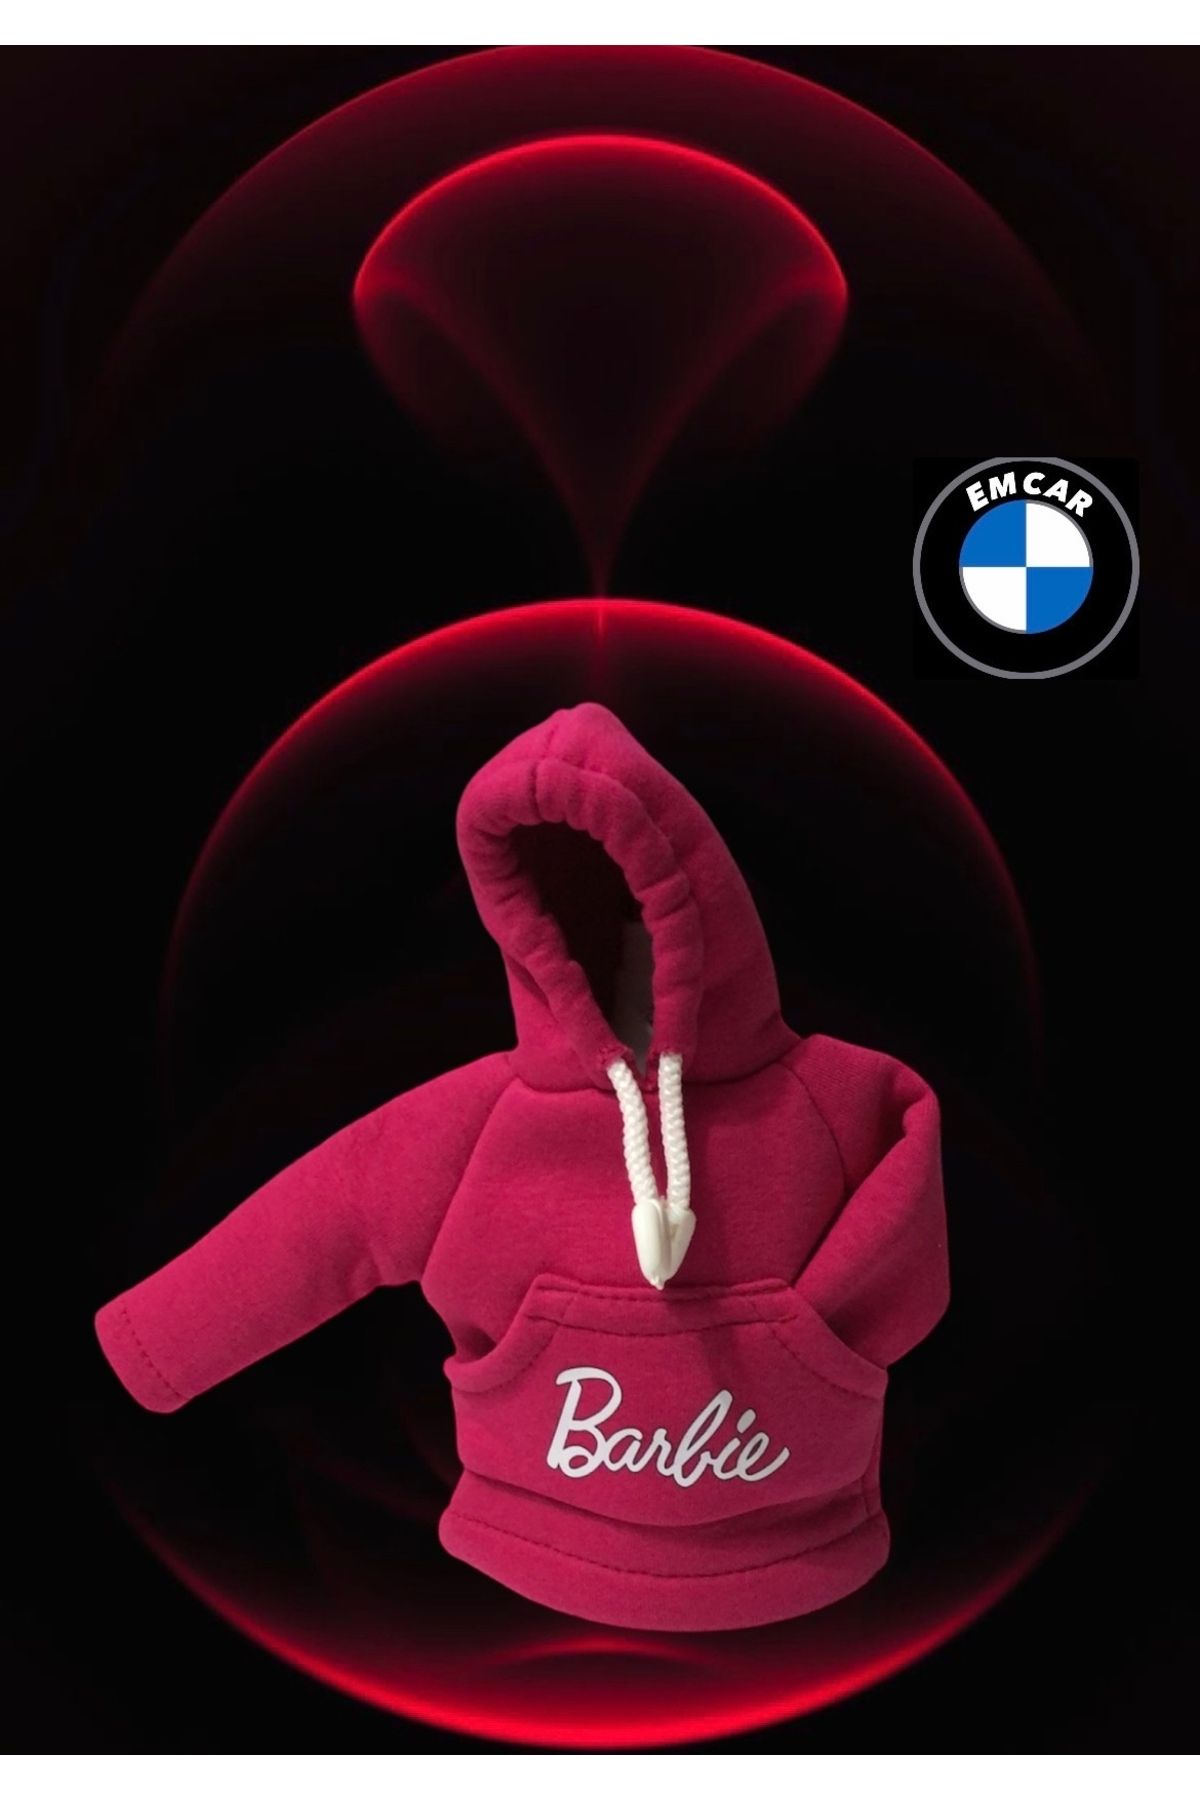 EMCARWAX EMCAR PEMBE Barbie Vites Kılıfı Kapşonlu Sweatshirt